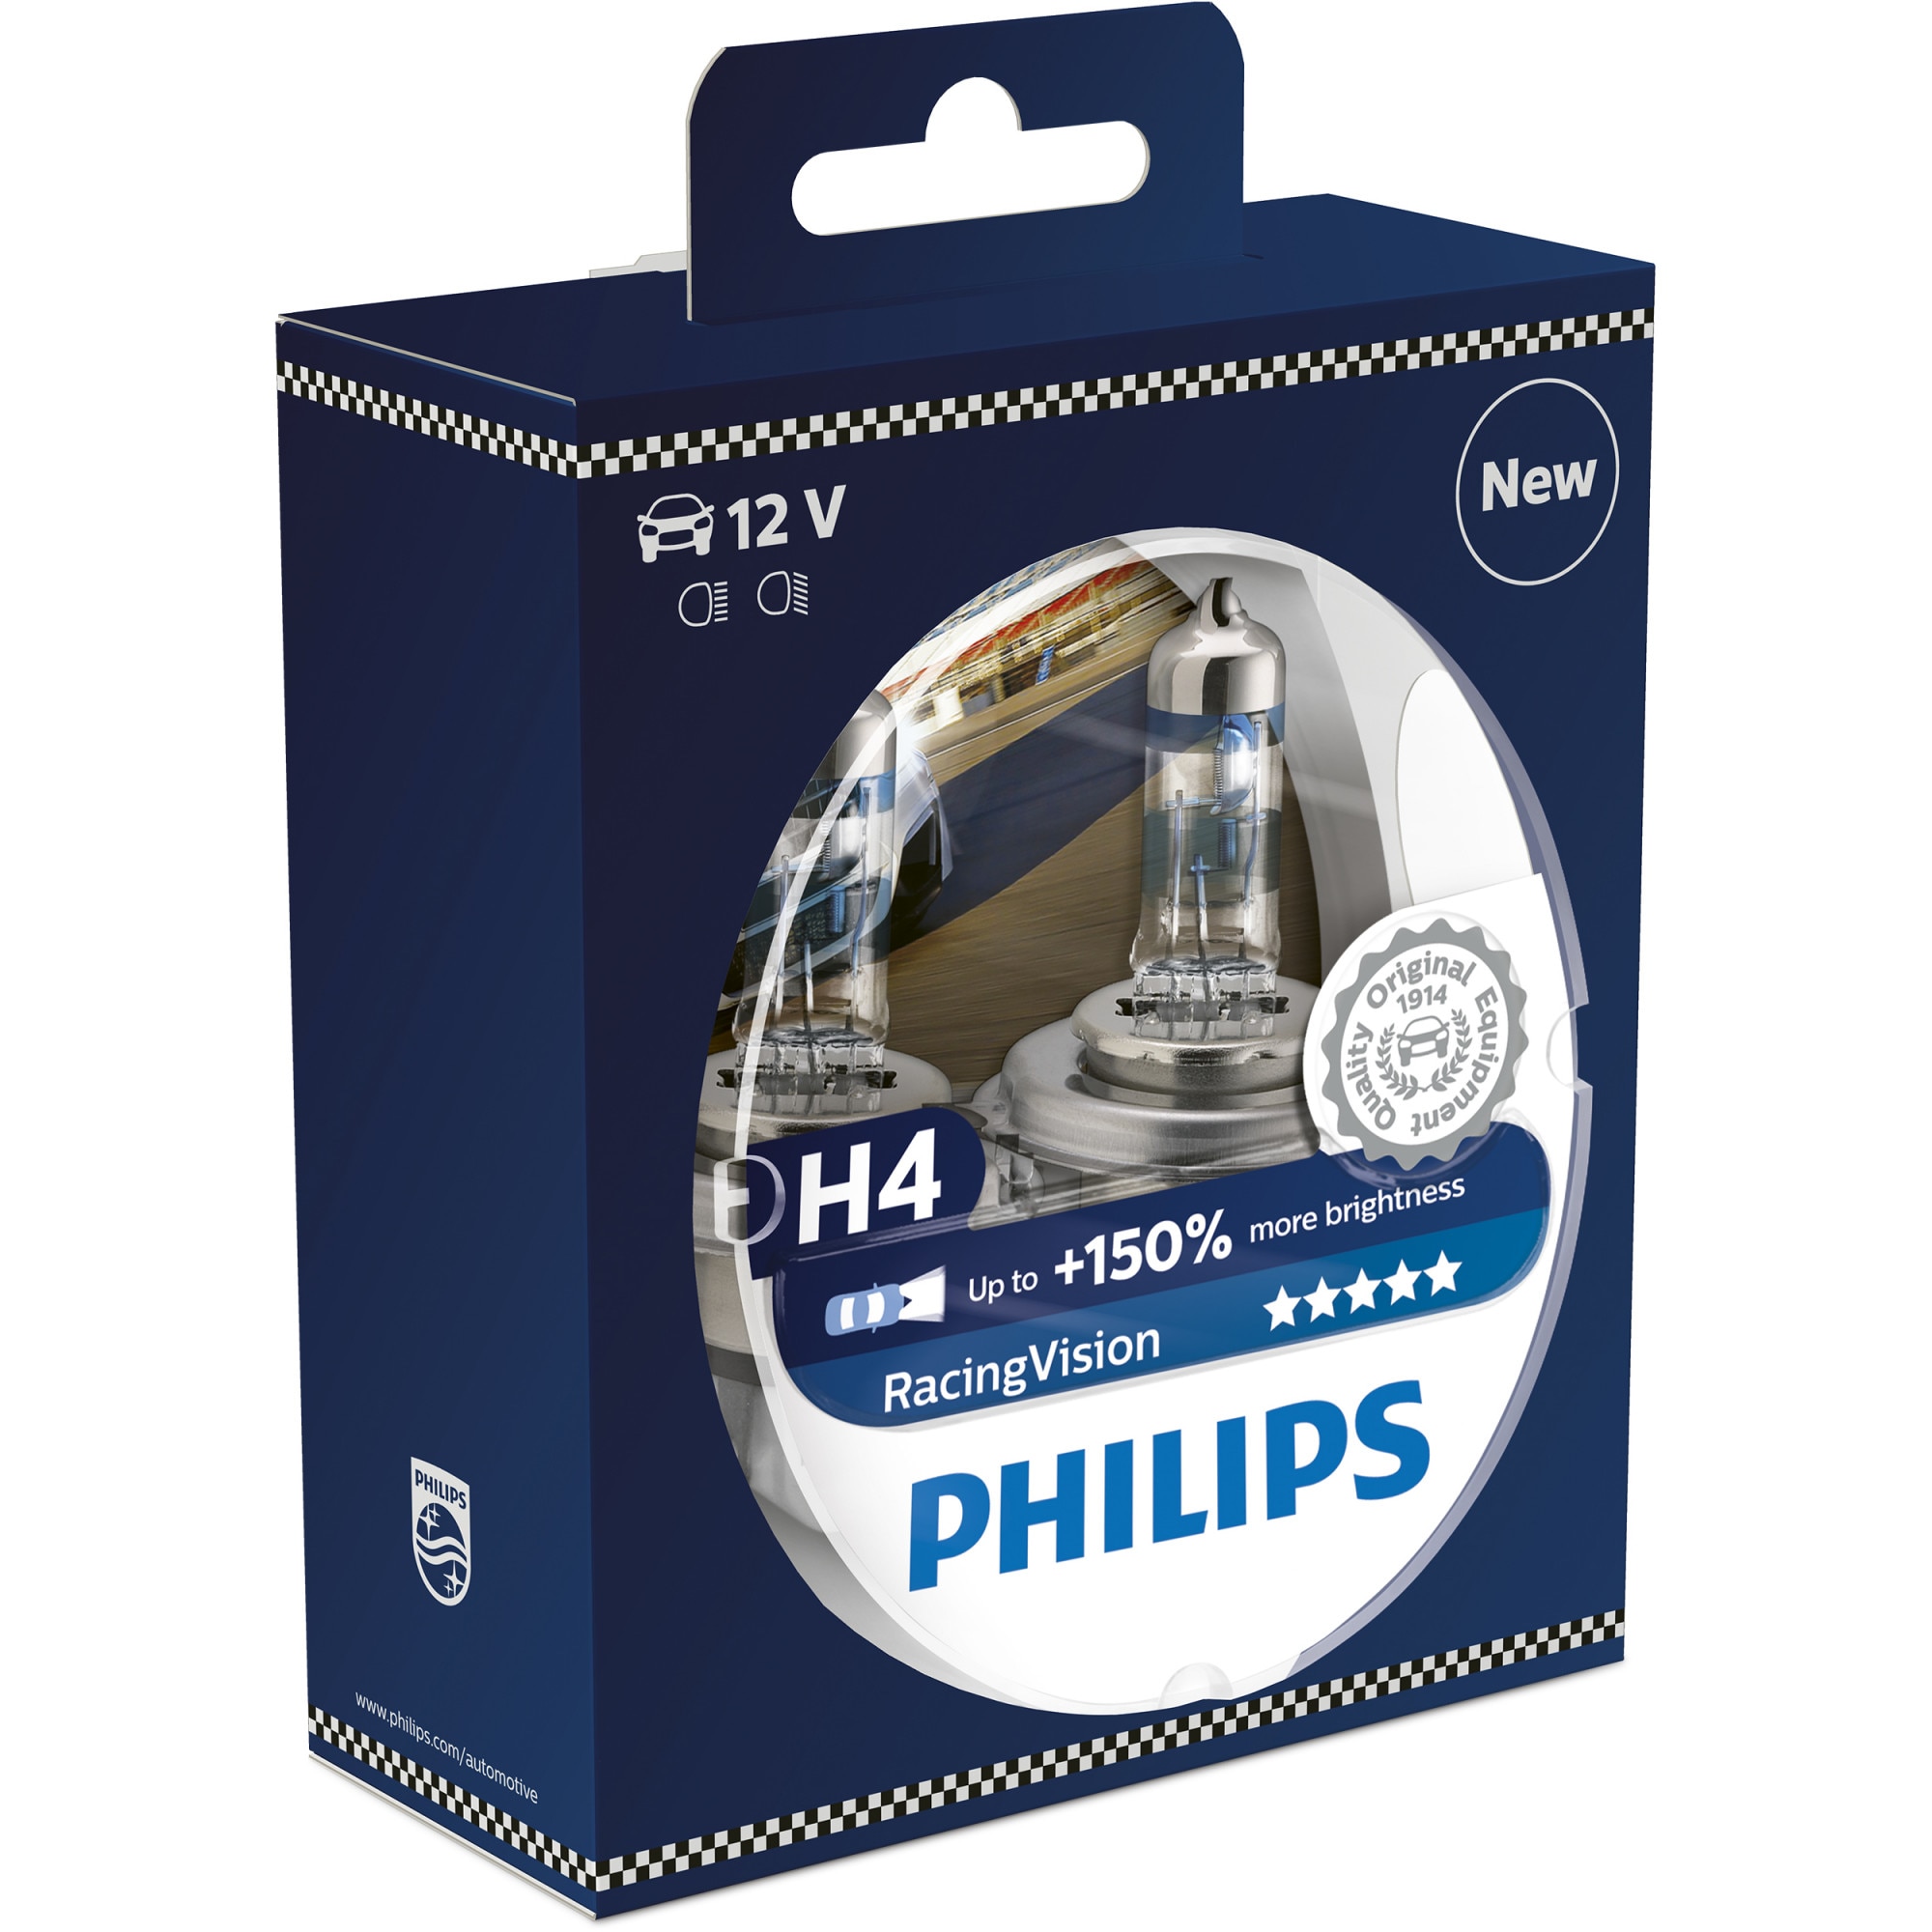 H4 12v 55w цена. 12972rvs2. Philips Racing Vision +150 h7. Philips Racing Vision +150% h4 (p43t) 12v 60/55w. Галогенная лампа Philips h4 +150.